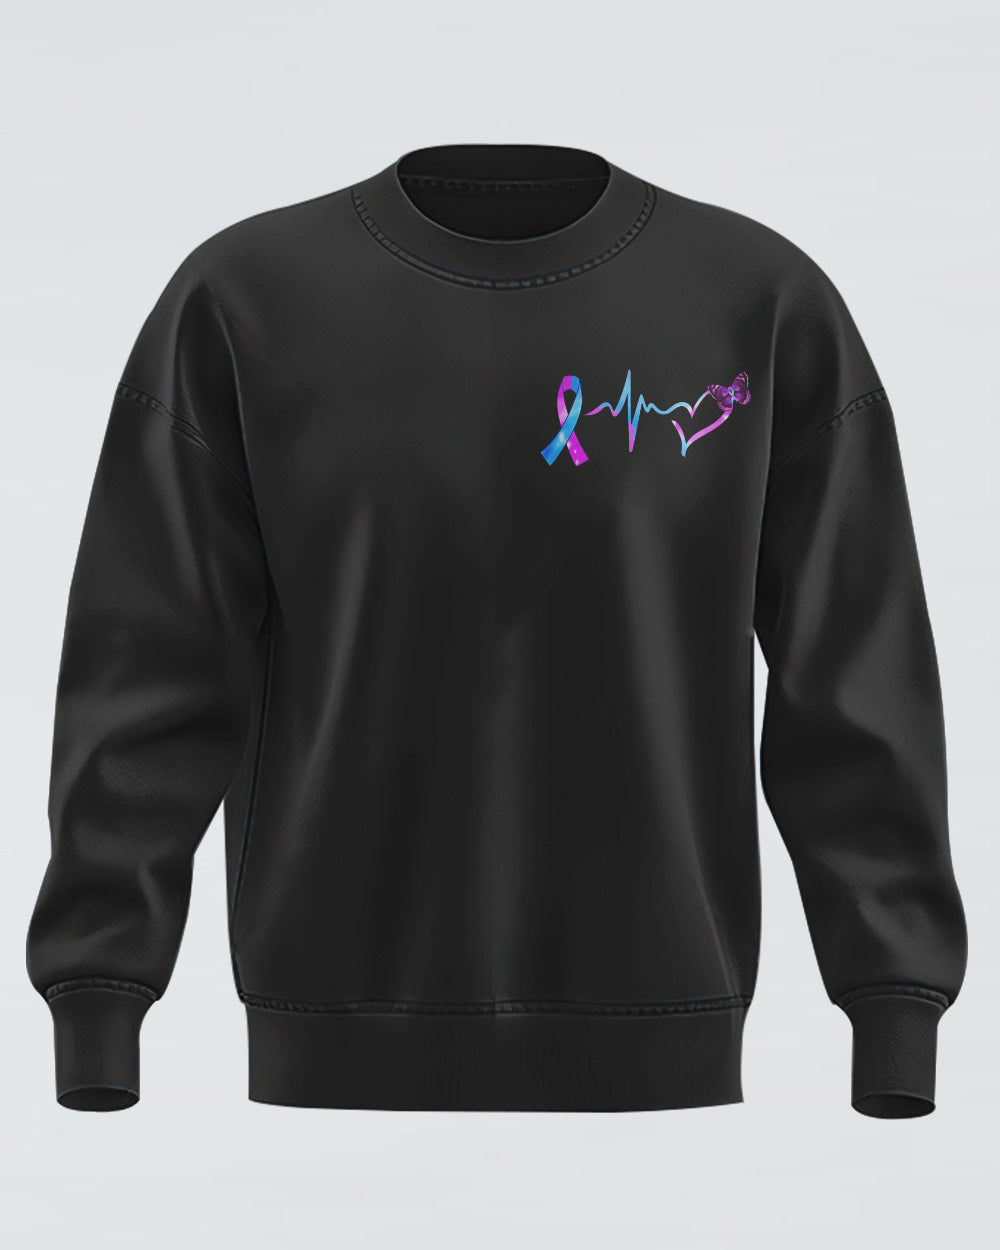 Butterfly Faith Hope Love Heart Women's Suicide Prevention Awareness Sweatshirt